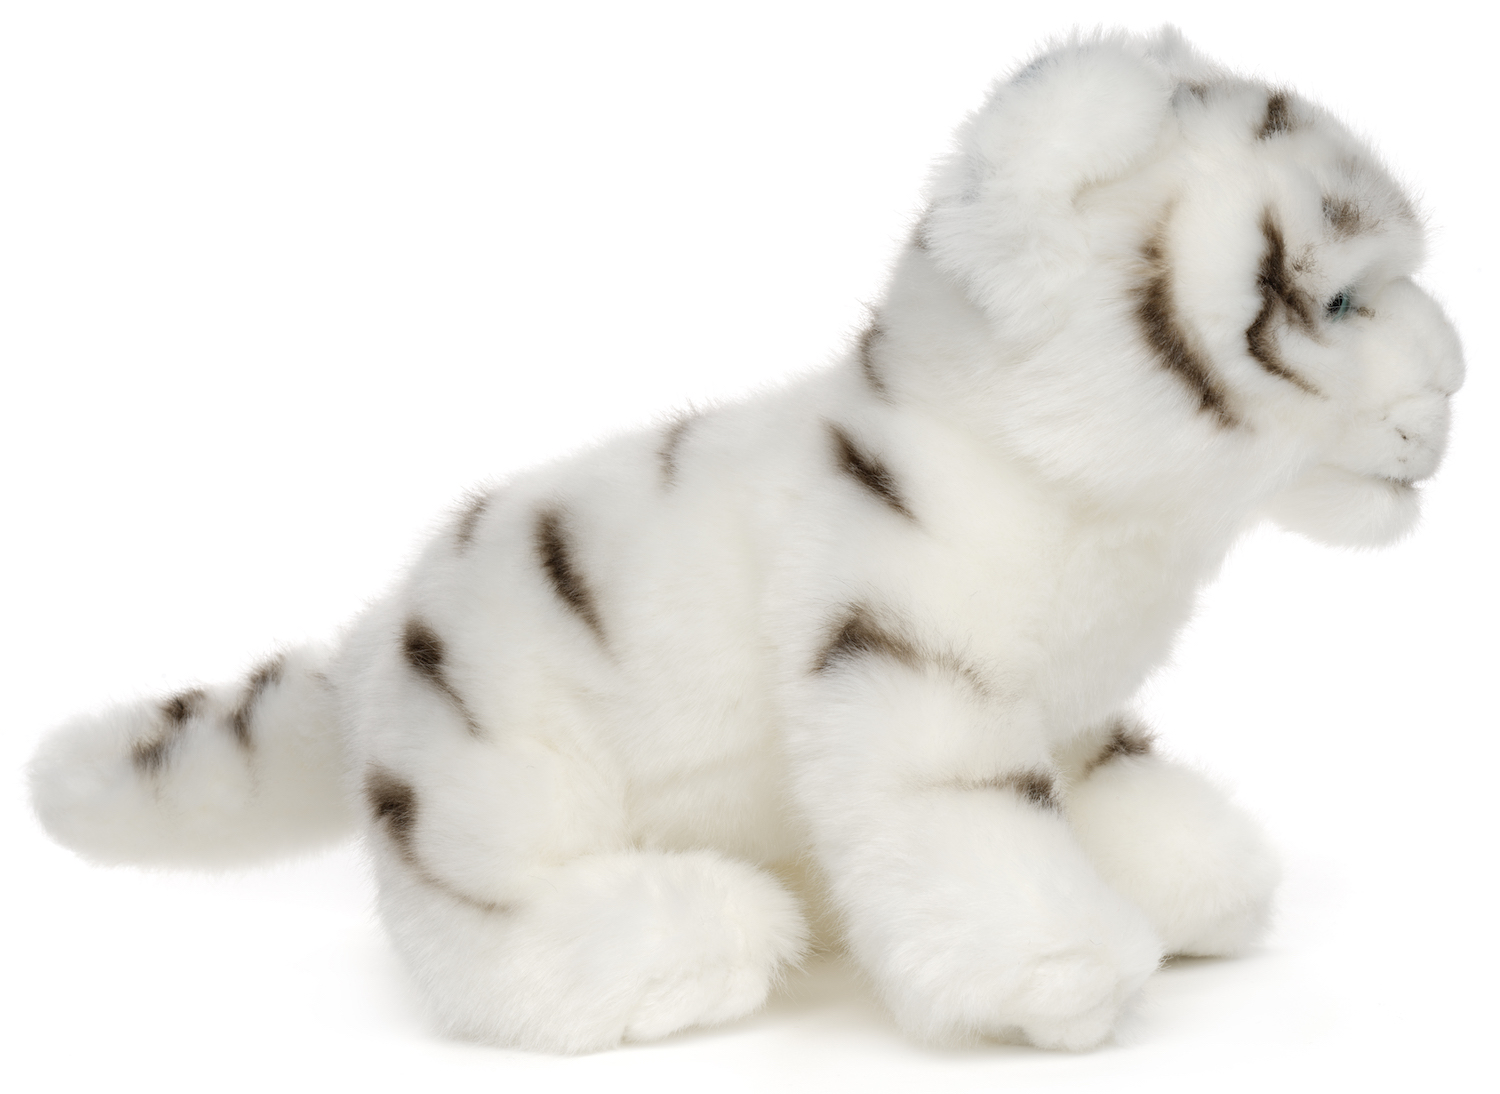 White Tiger Baby, sitting - 24 cm (length)